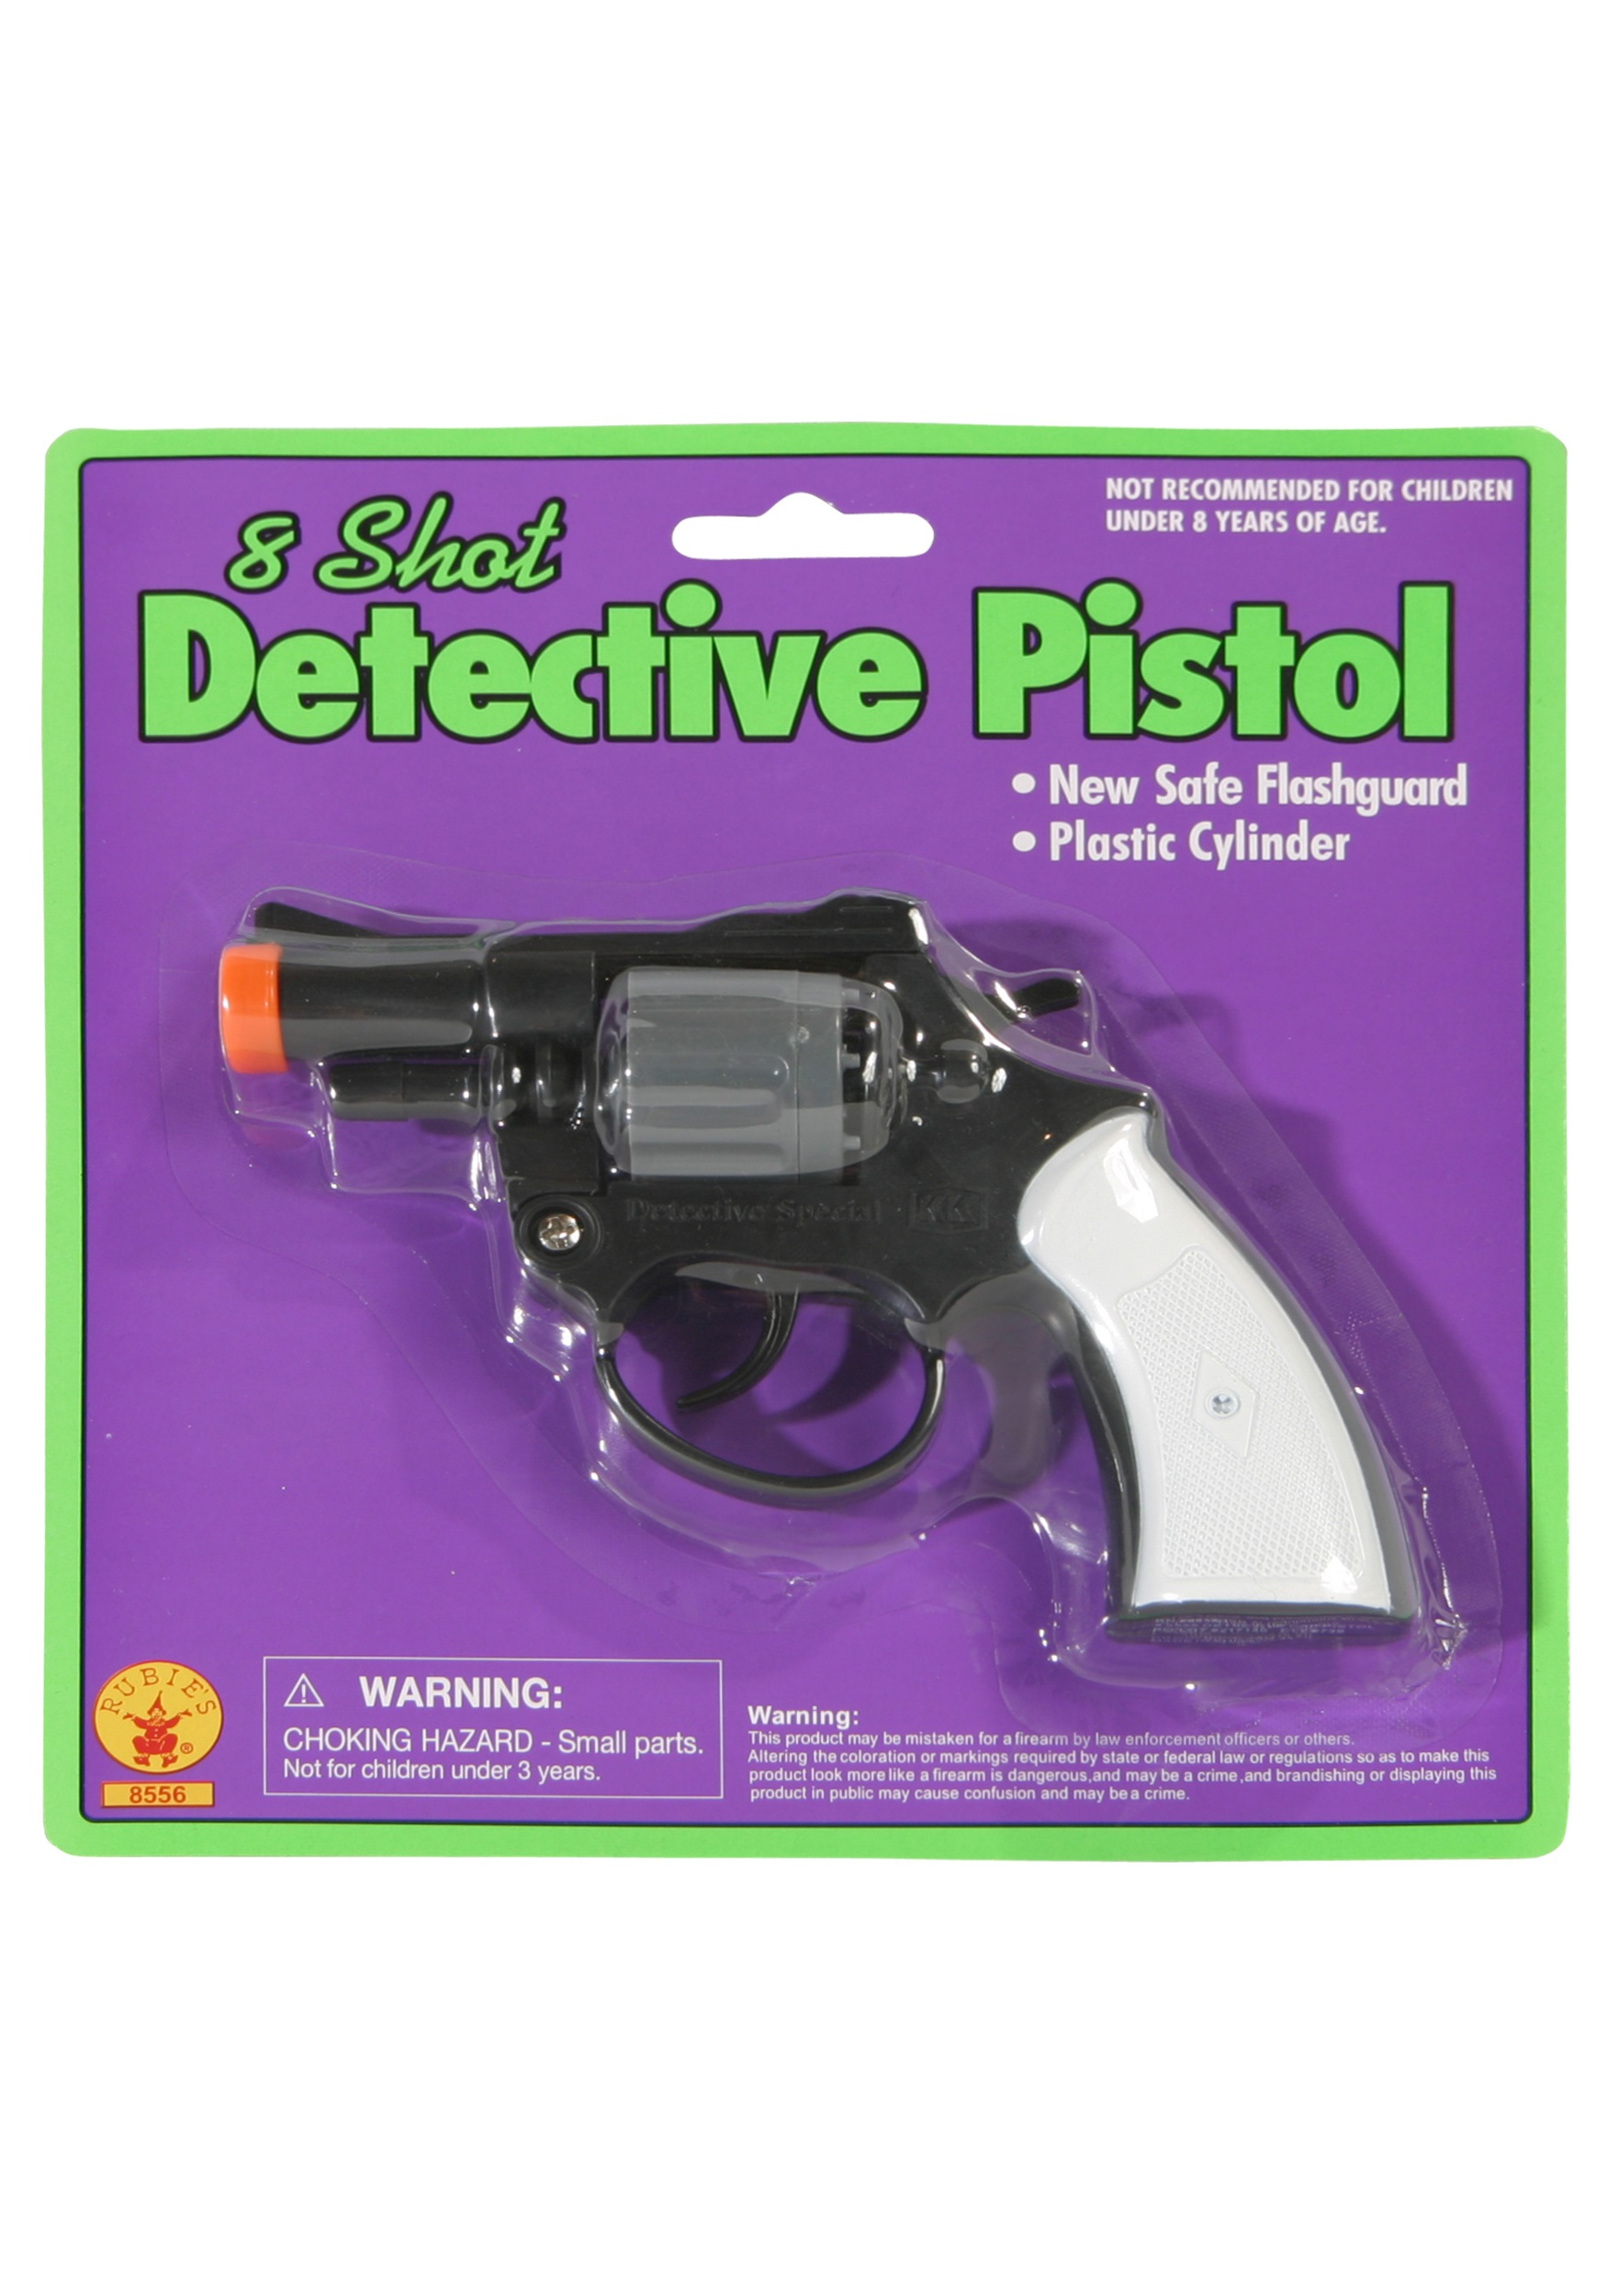 Revolver Detective Pistol